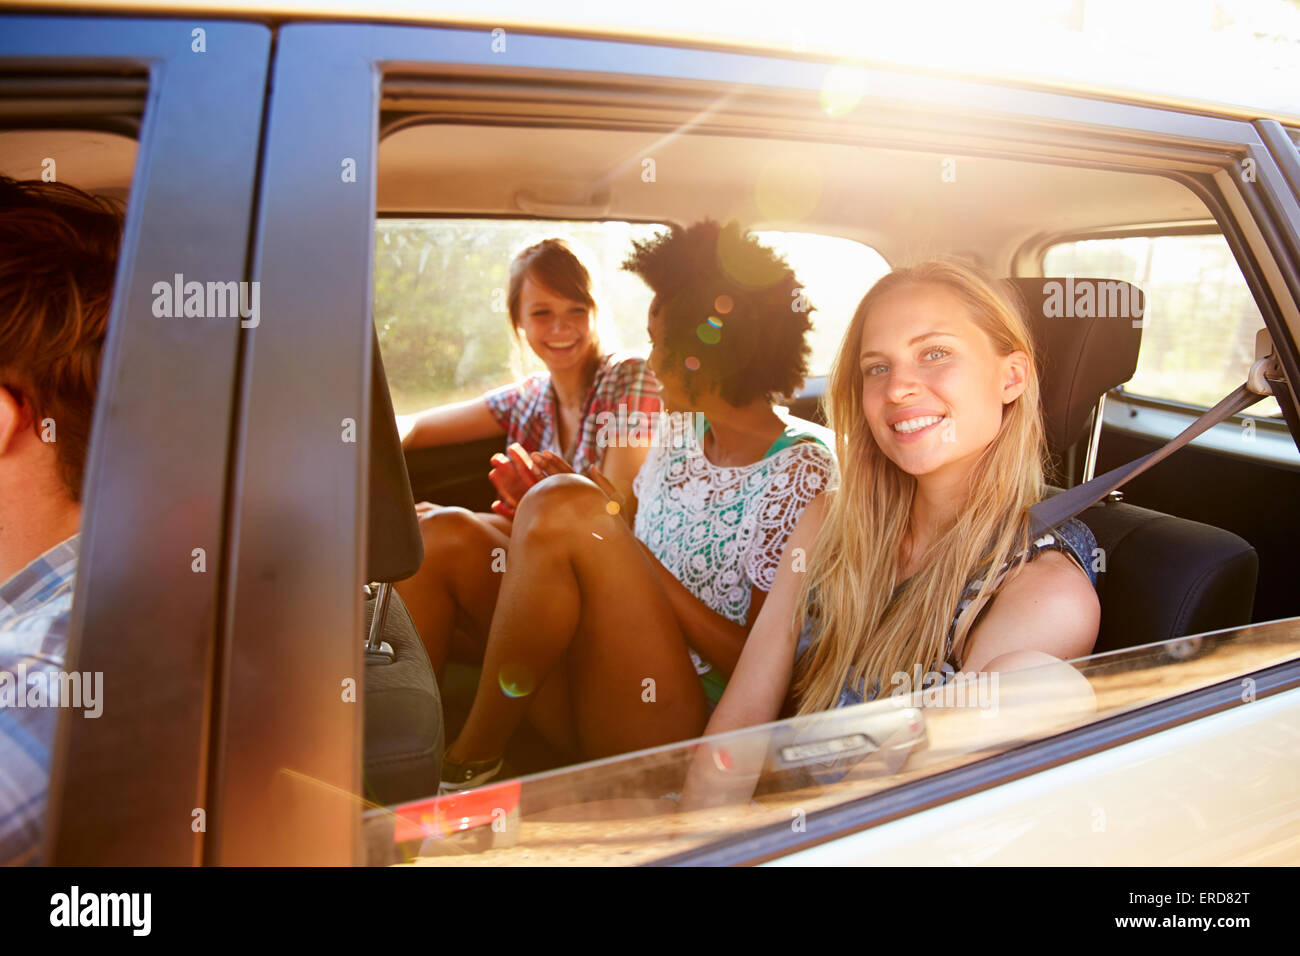 Three Women Sitting In Rear Seat Of Car On Road Trip Stock Photo